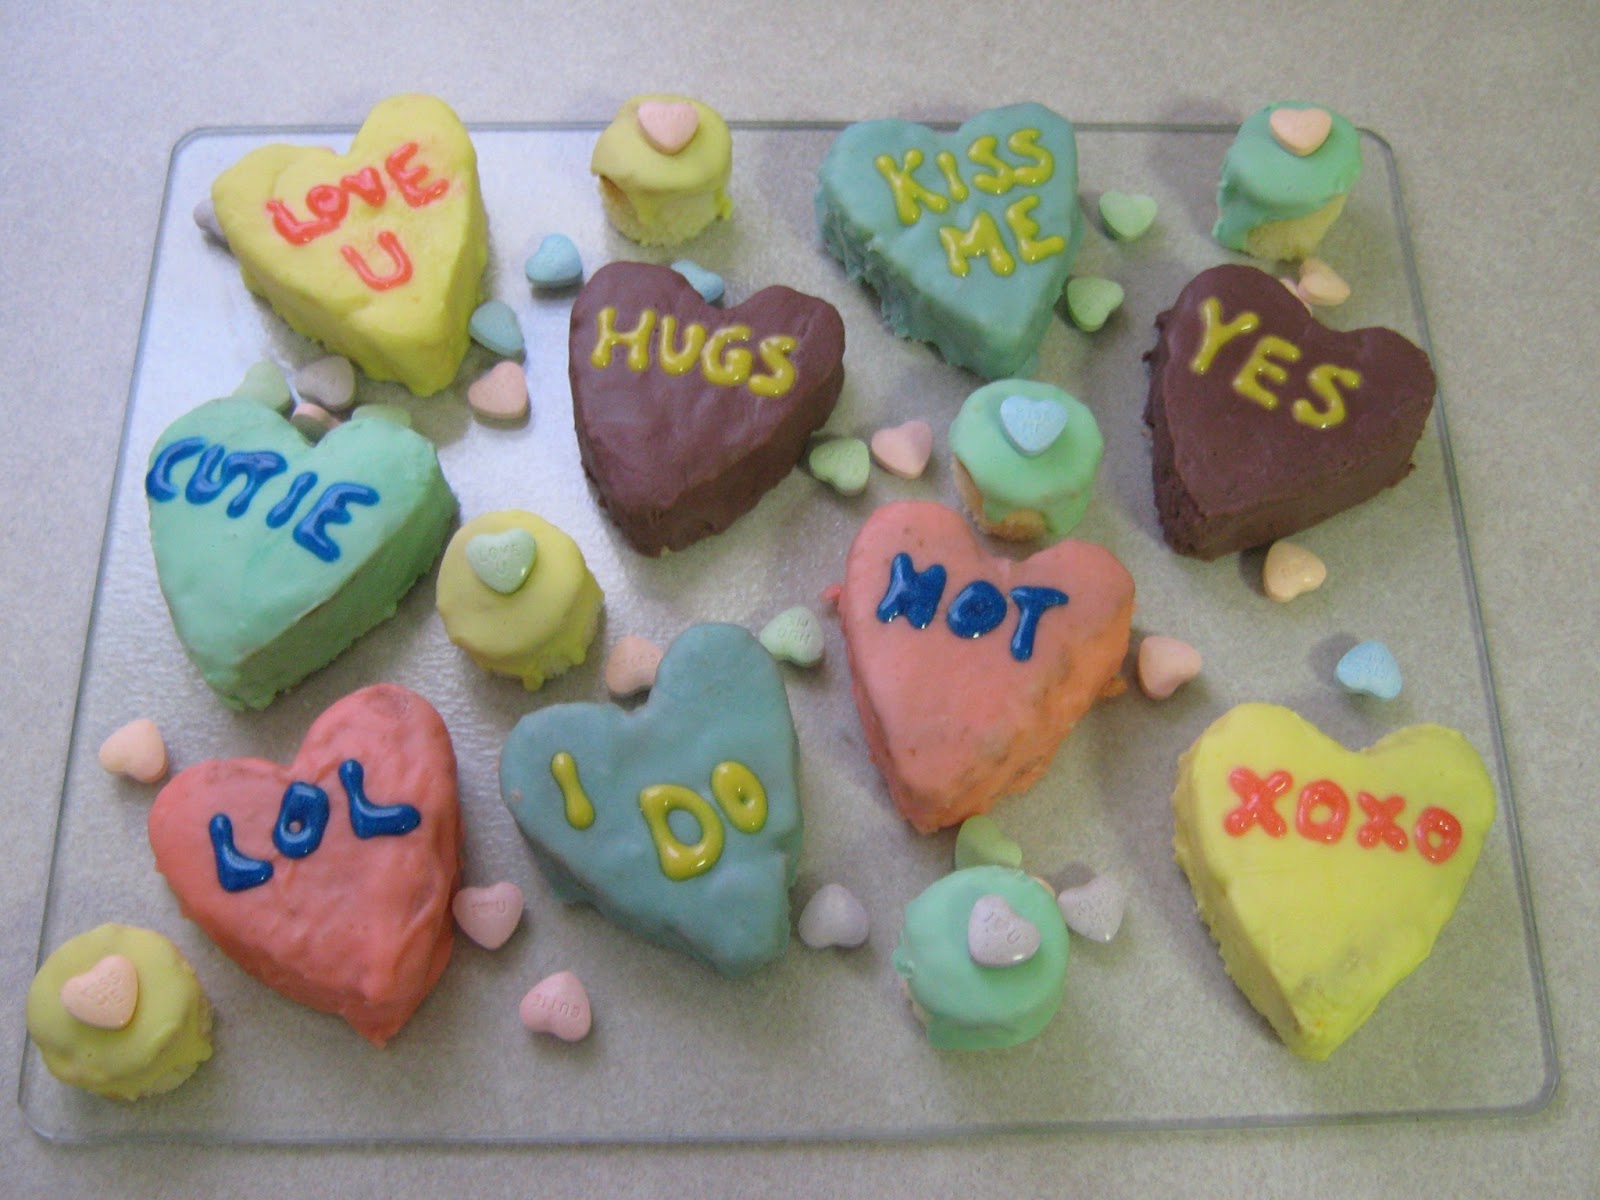 Deb's Birthday Cake Ideas for Kids Photo Gallery: Valentine's Day Heart ...